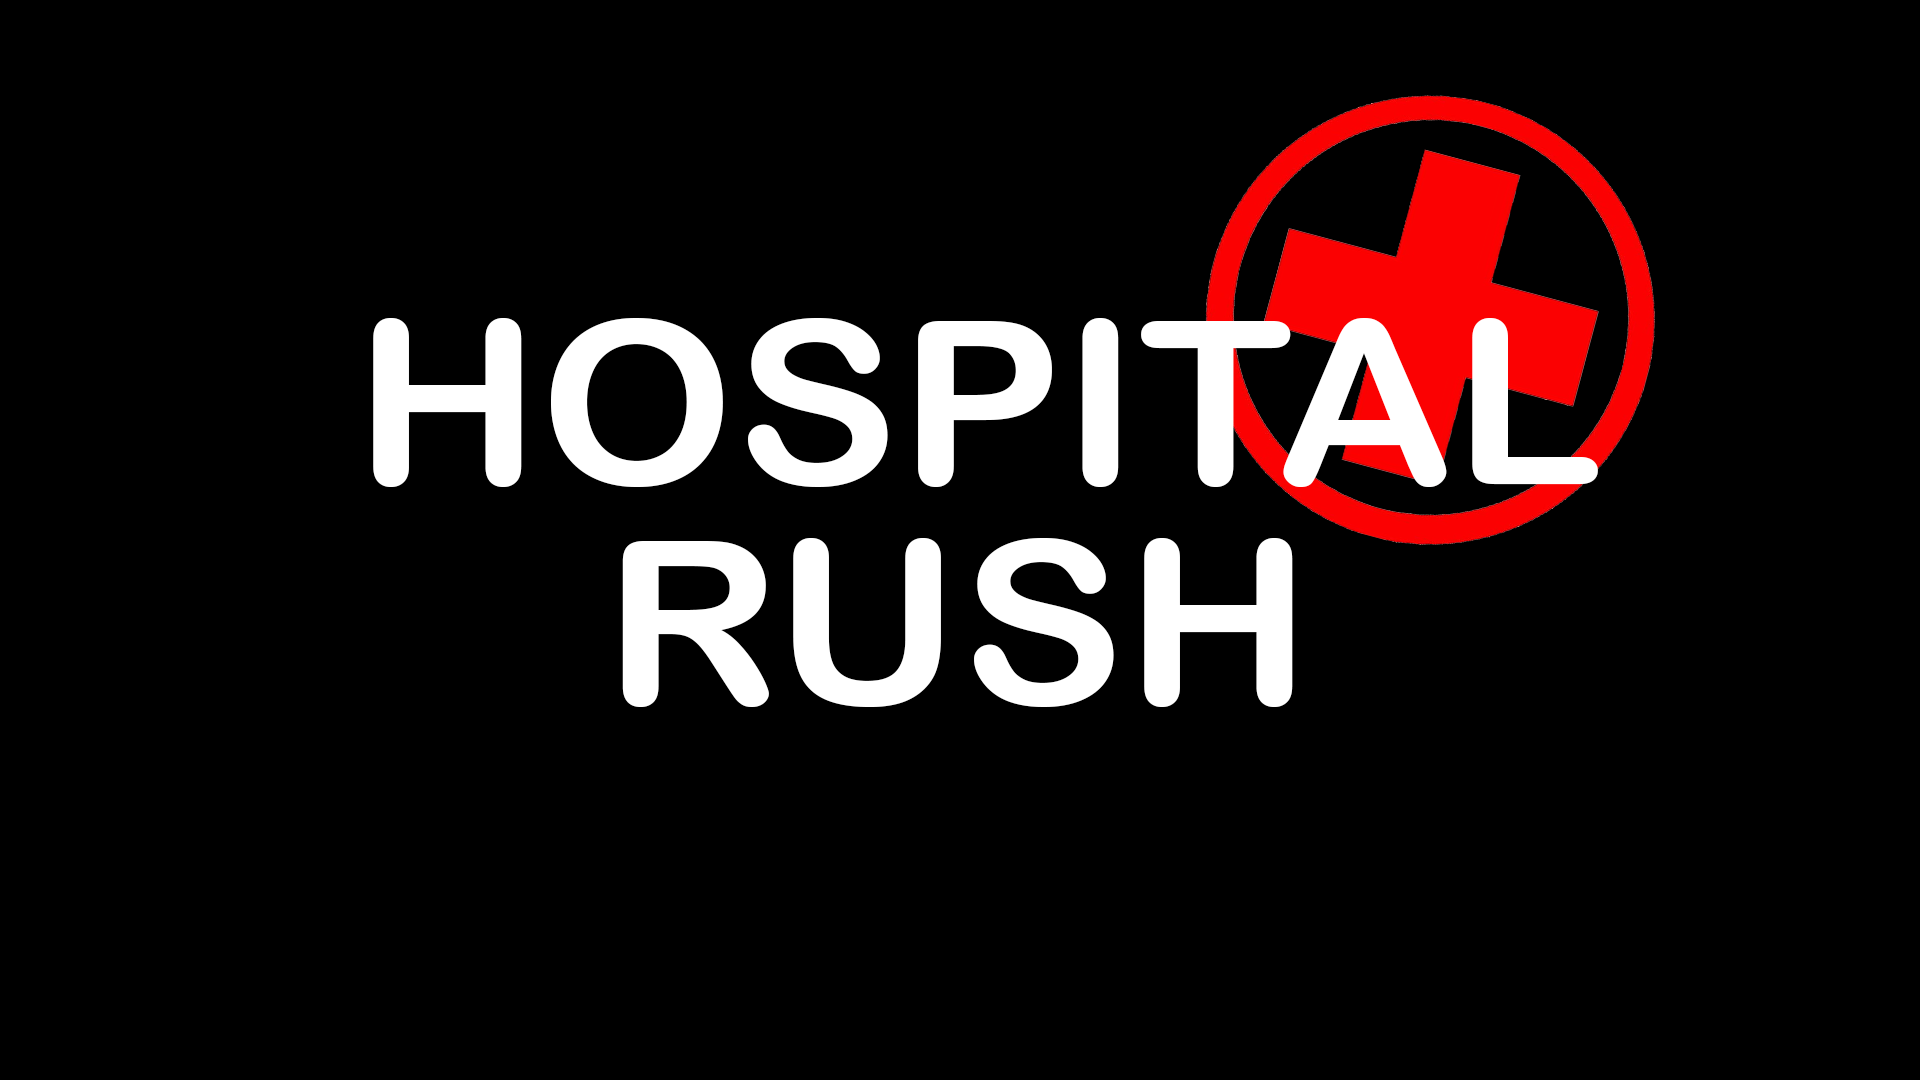 Hospital Rush